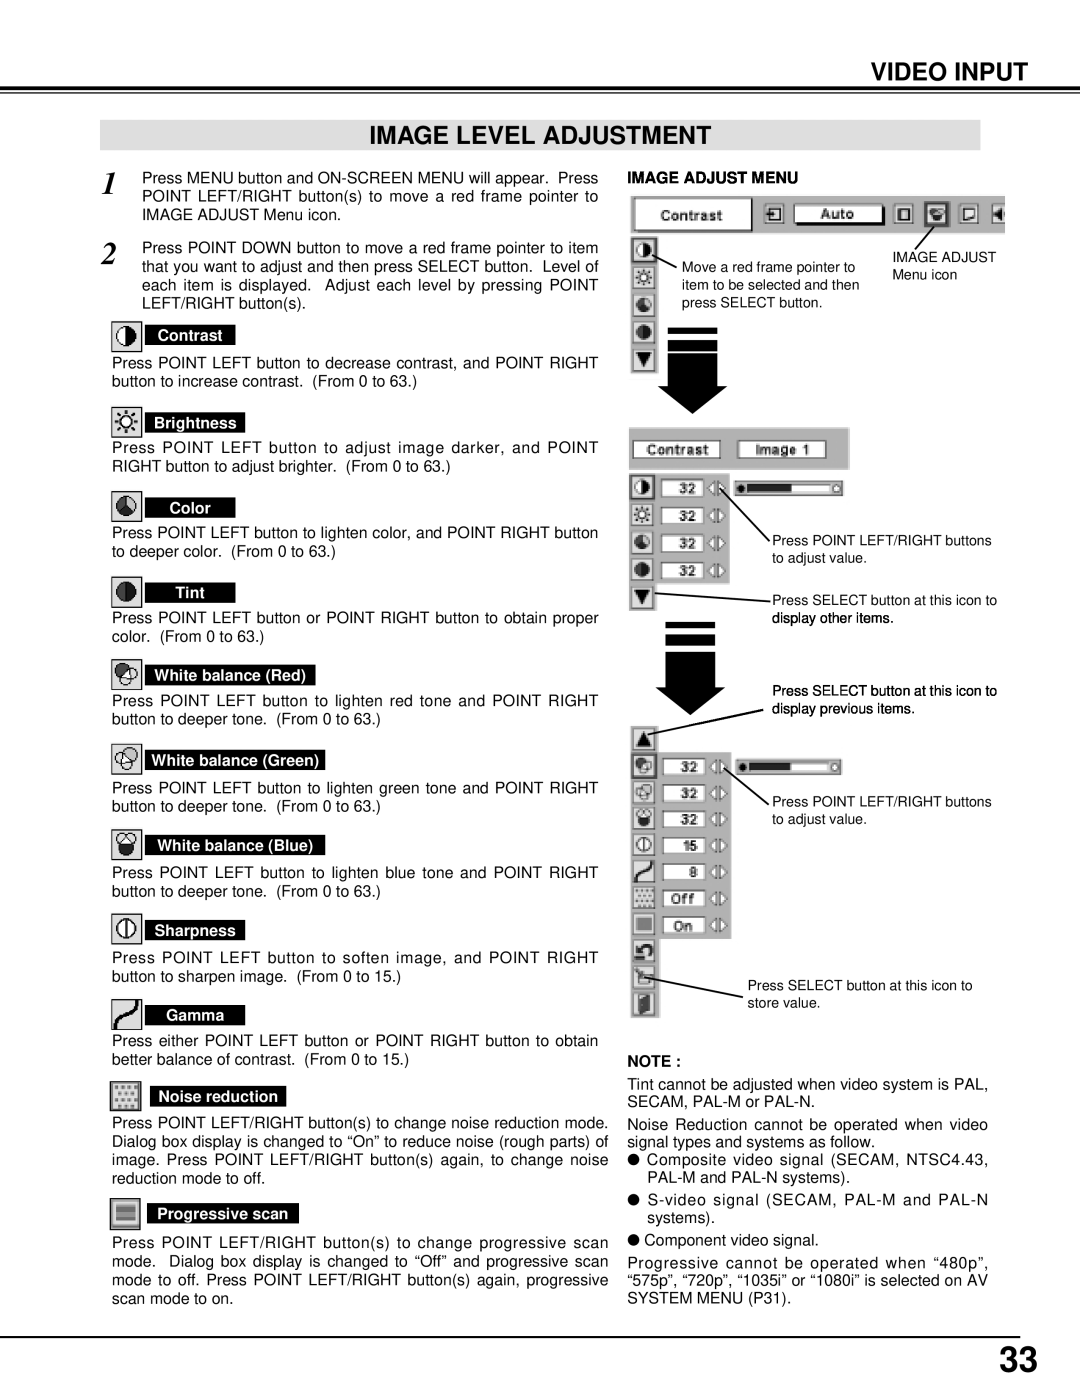 Eiki LC-X986 instruction manual Video Input Image Level Adjustment, Image Adjust Menu 